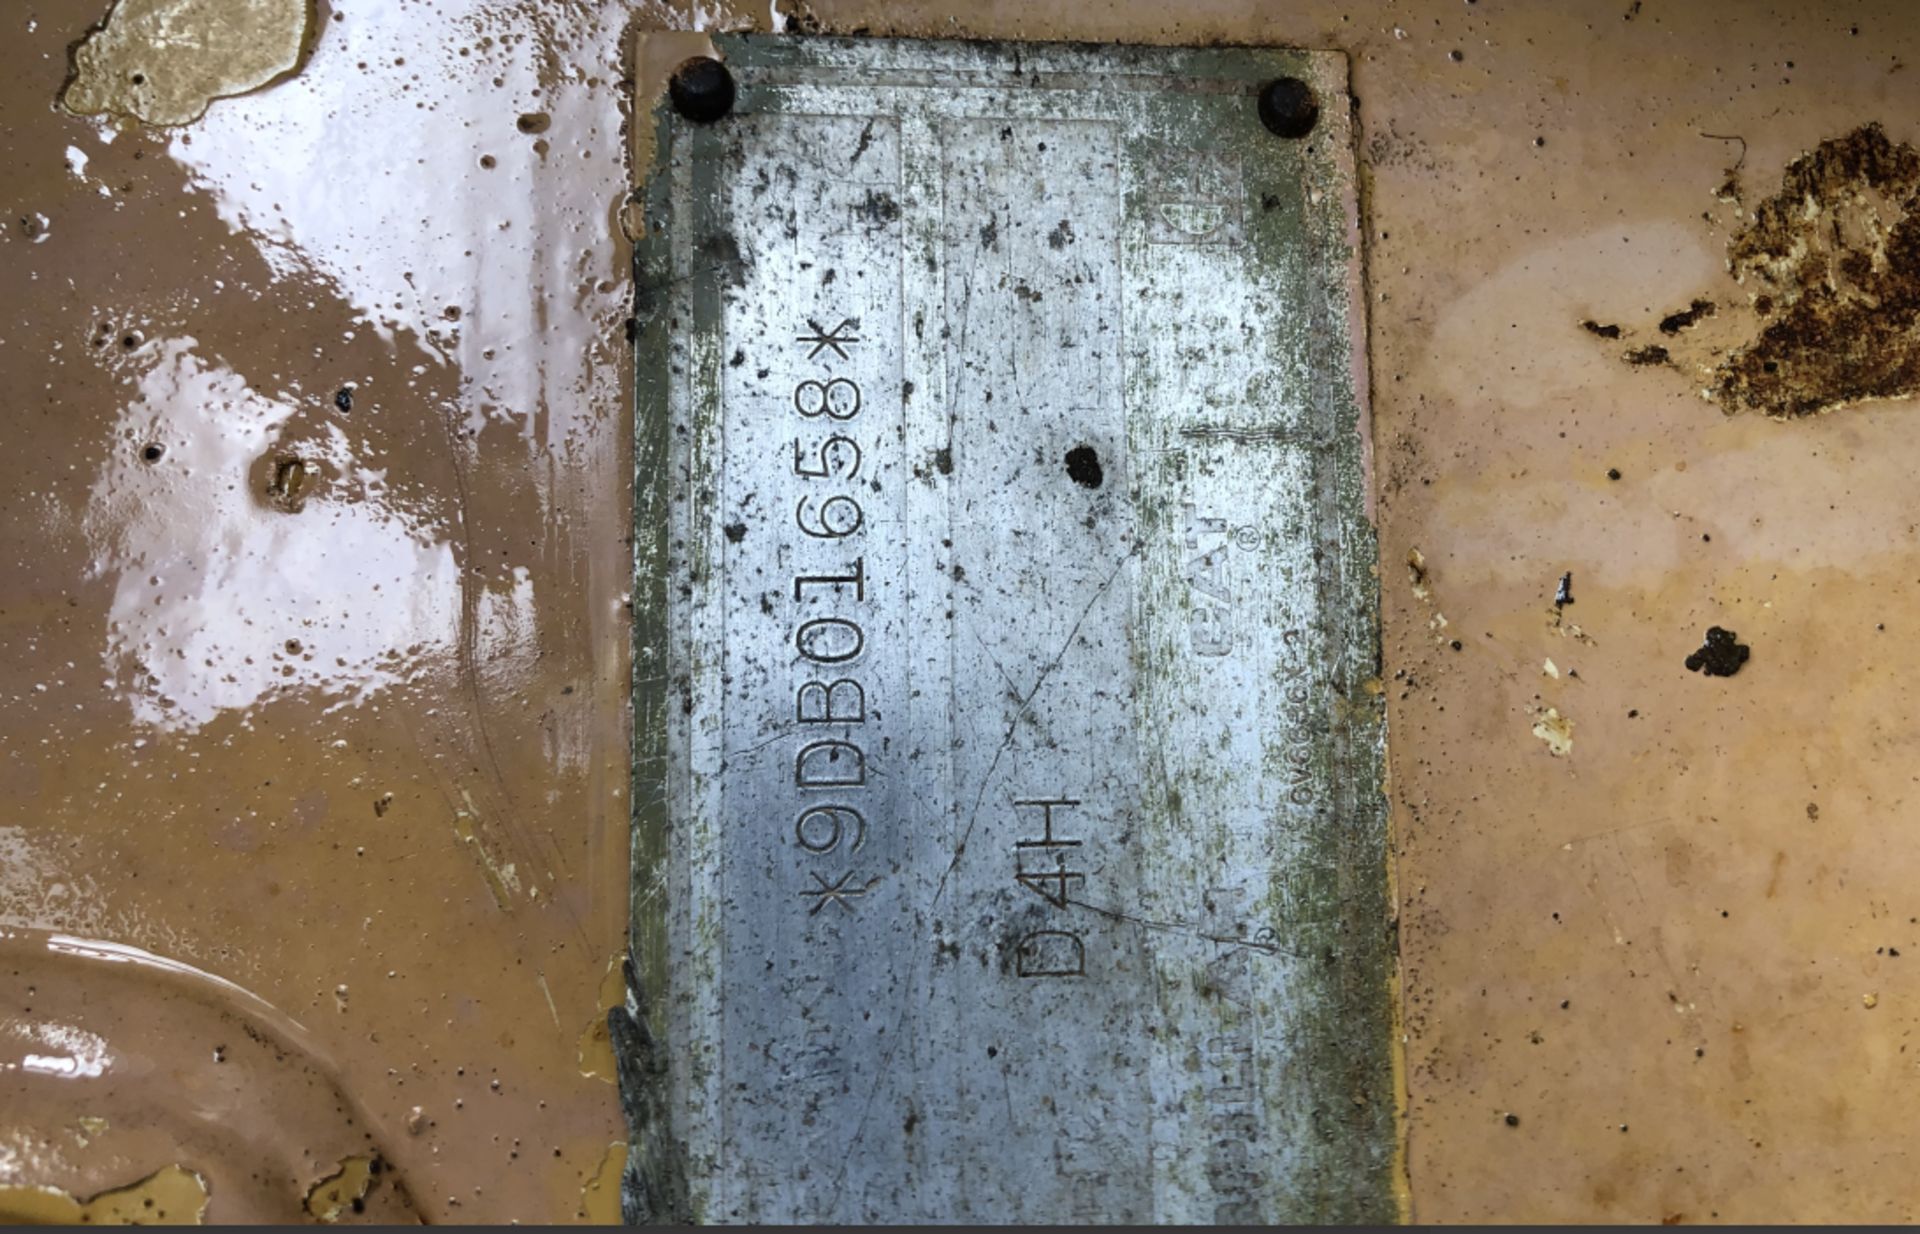 CATERPILLAR D4H LGP TRACKED DOZER | RECON ENGINE - Bild 5 aus 12